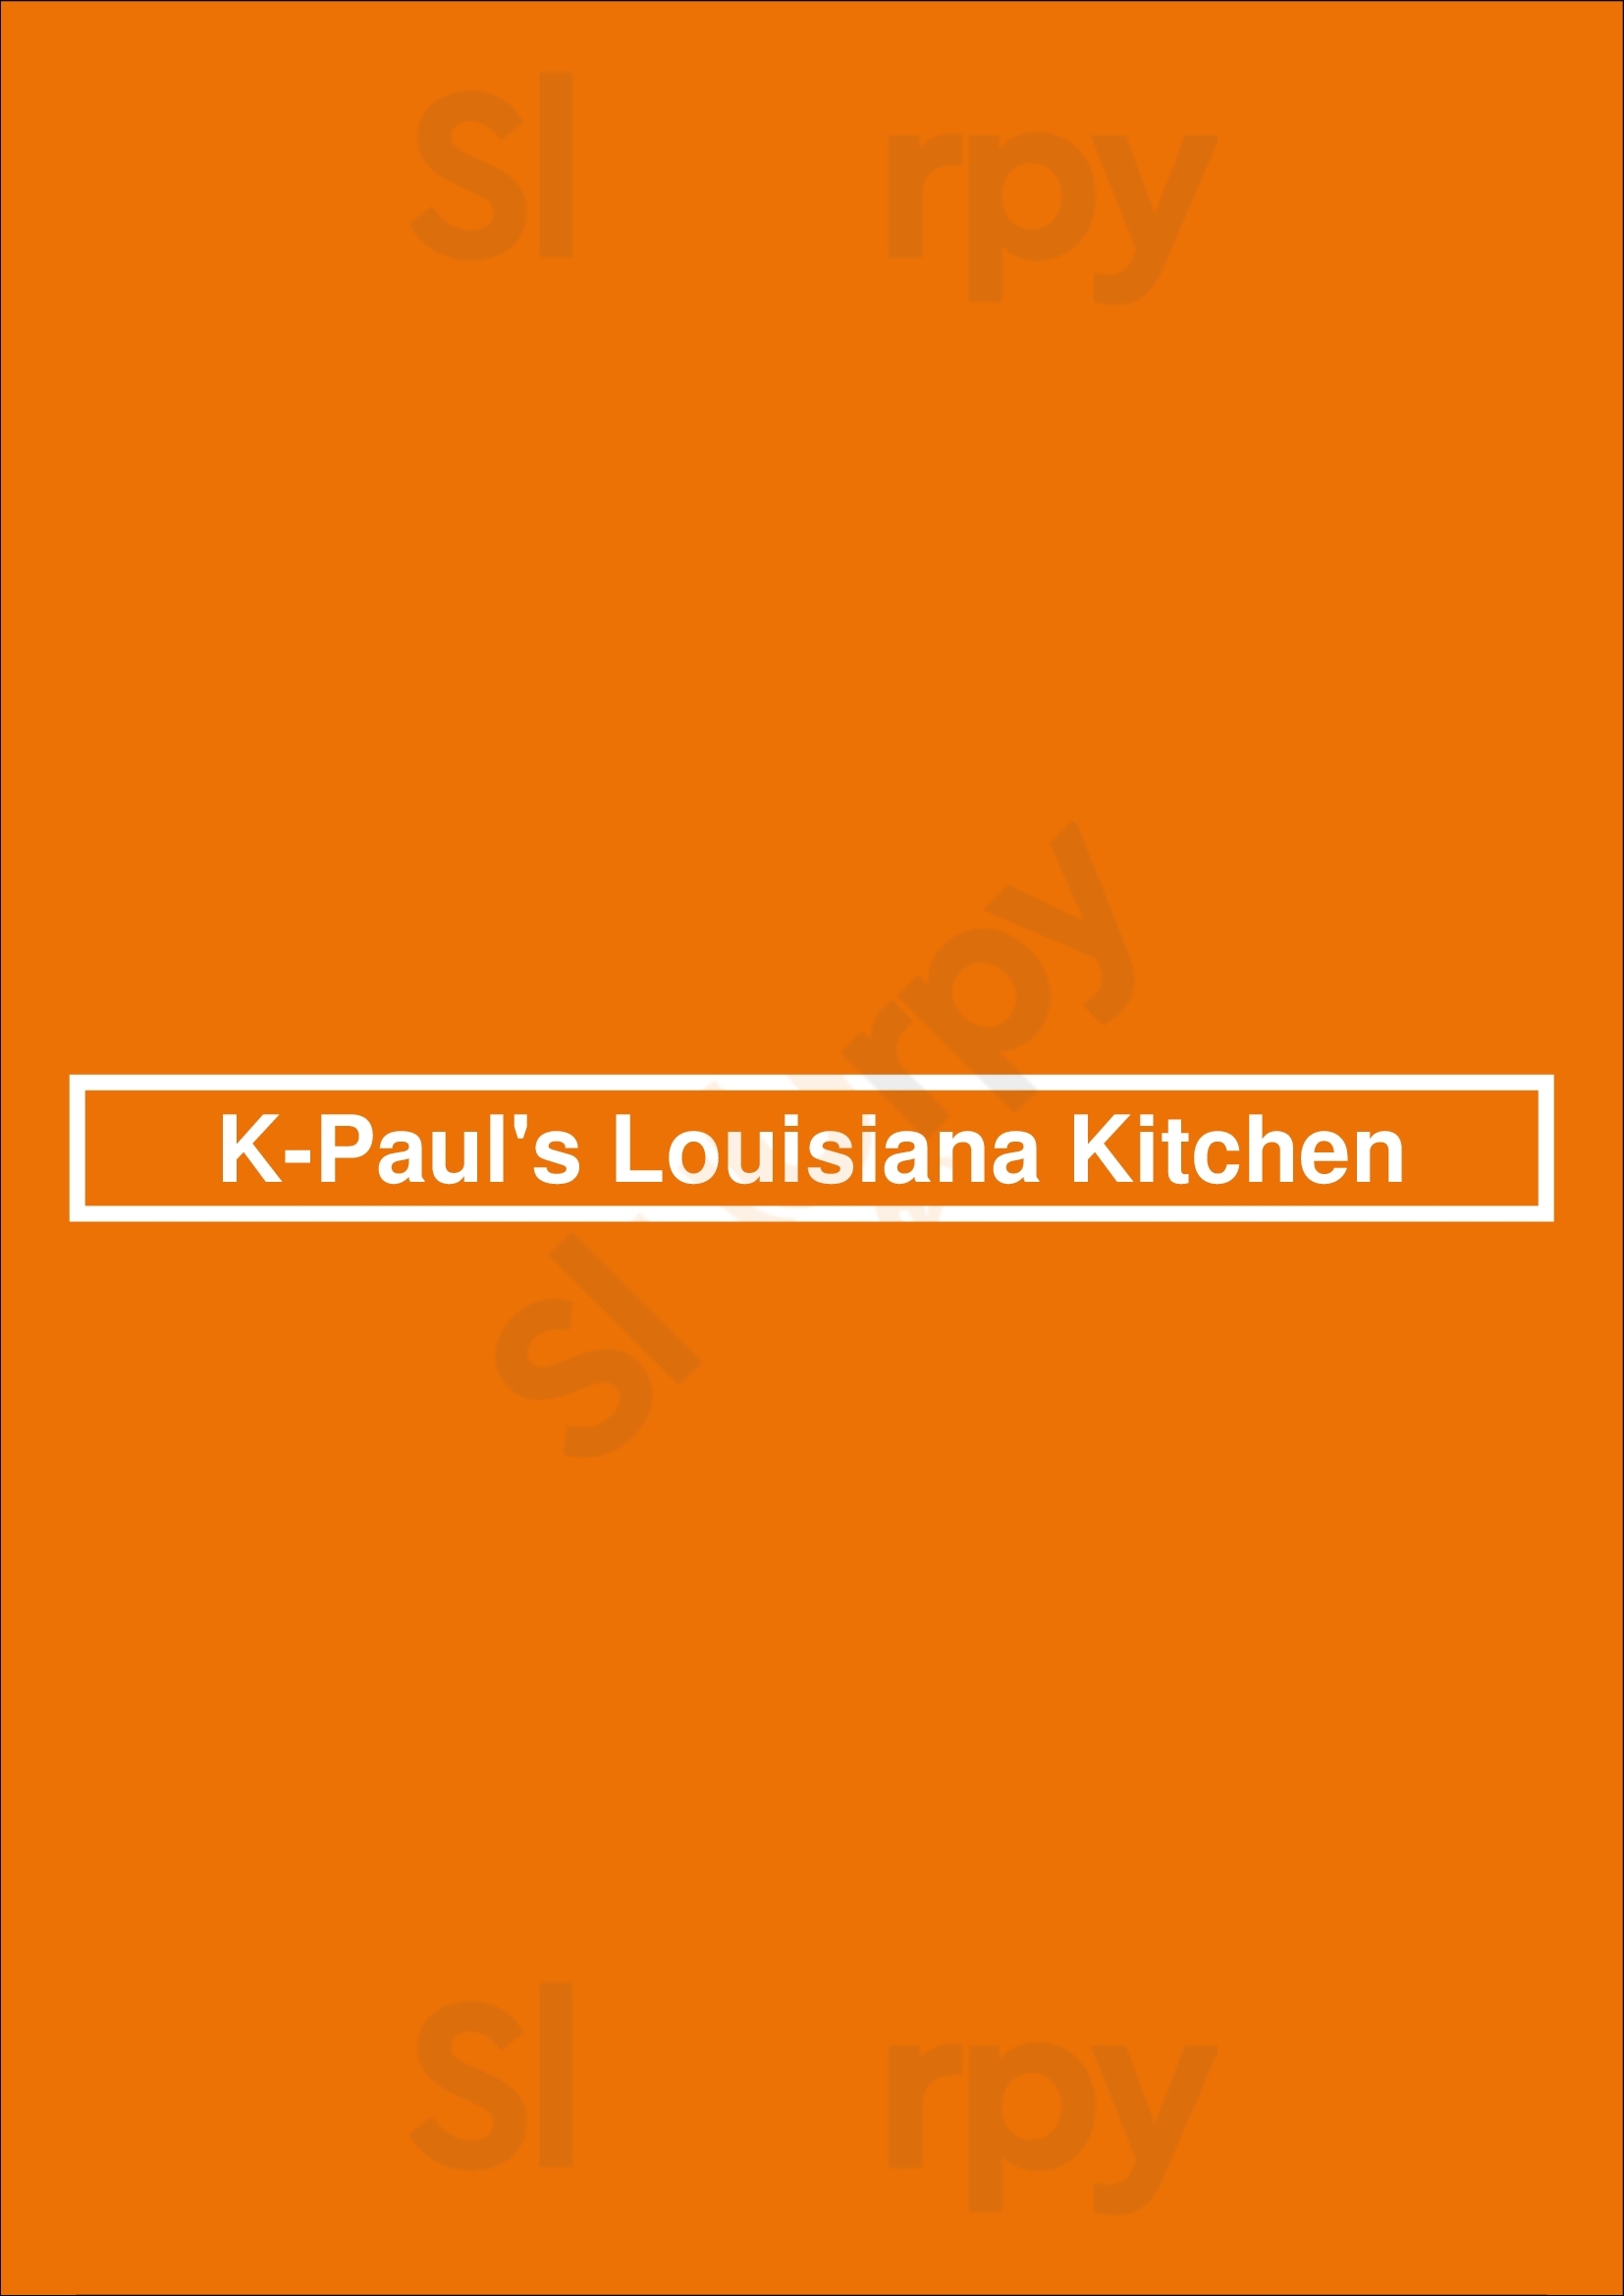 K-paul's Louisiana Kitchen New Orleans Menu - 1